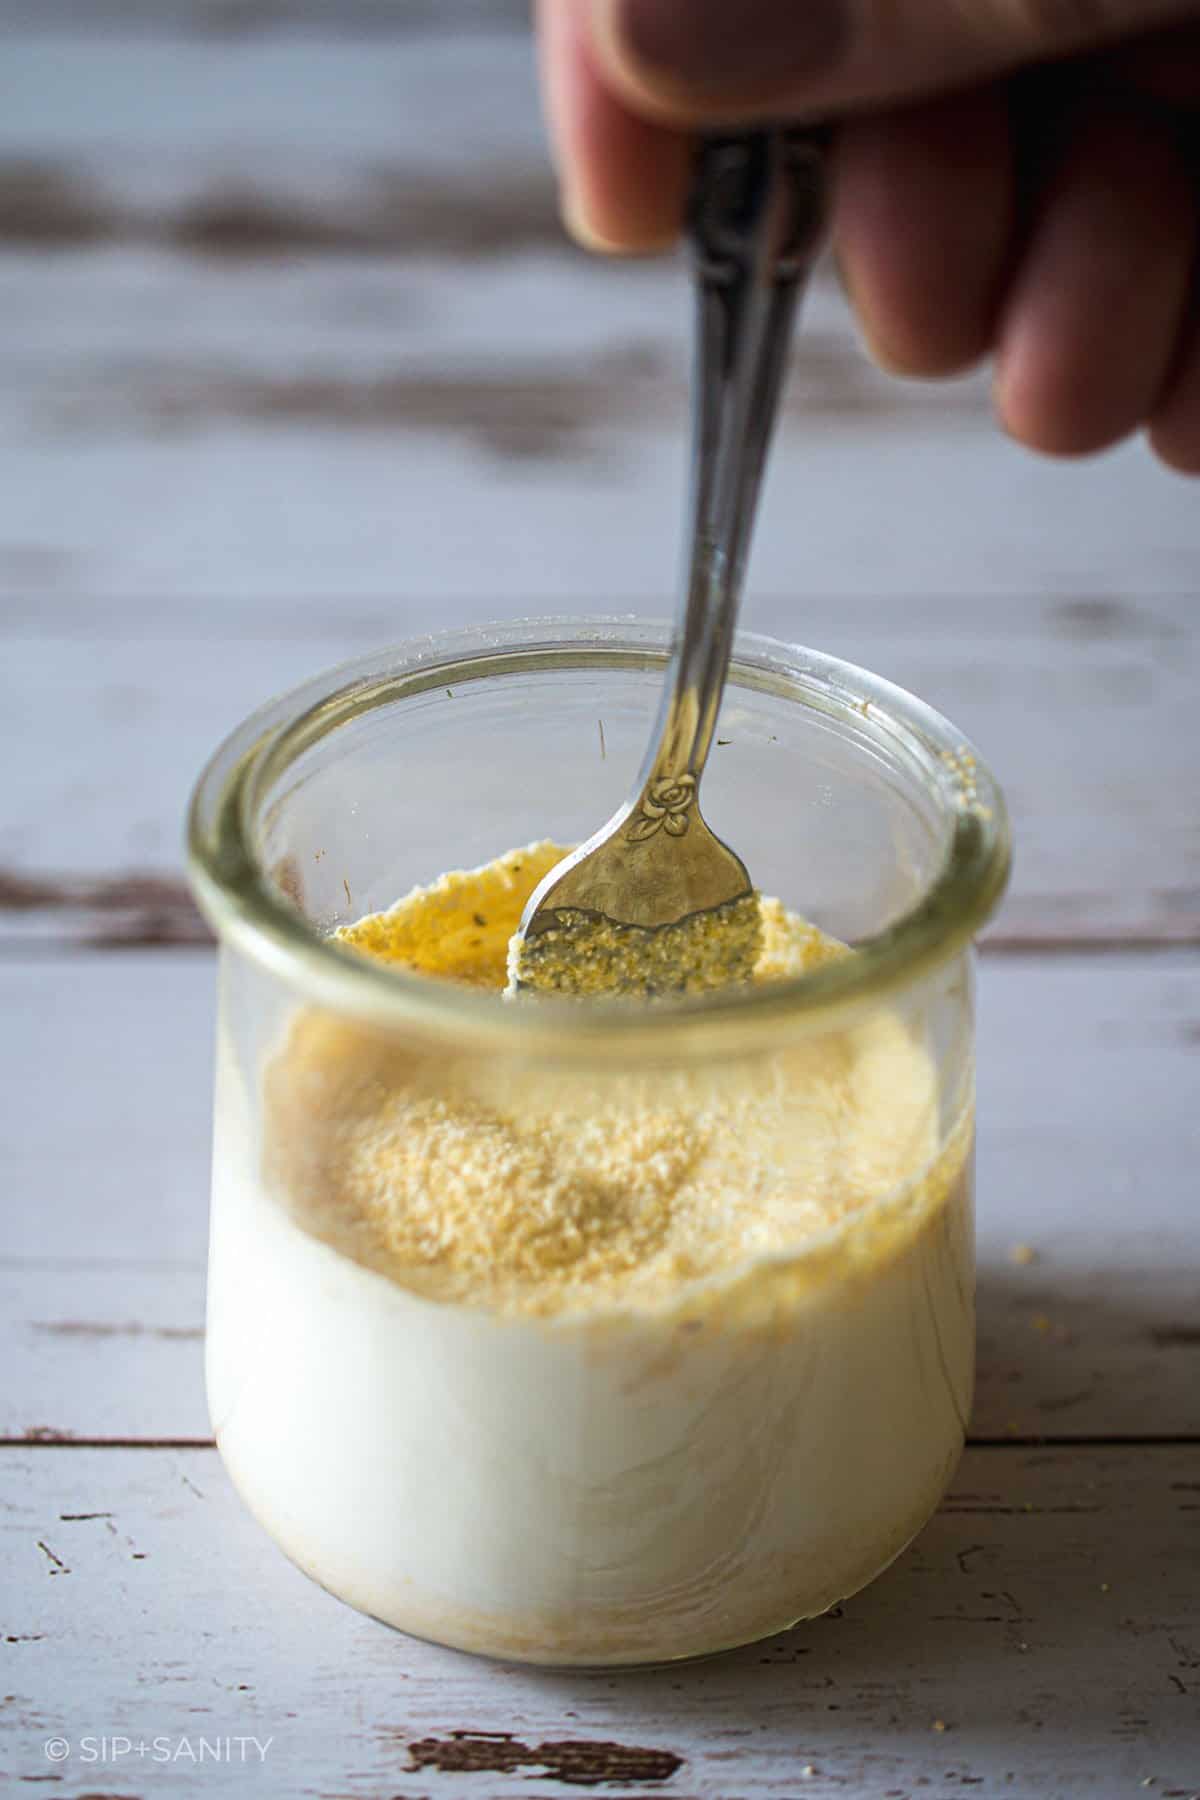 Stirring cornmeal into cream.